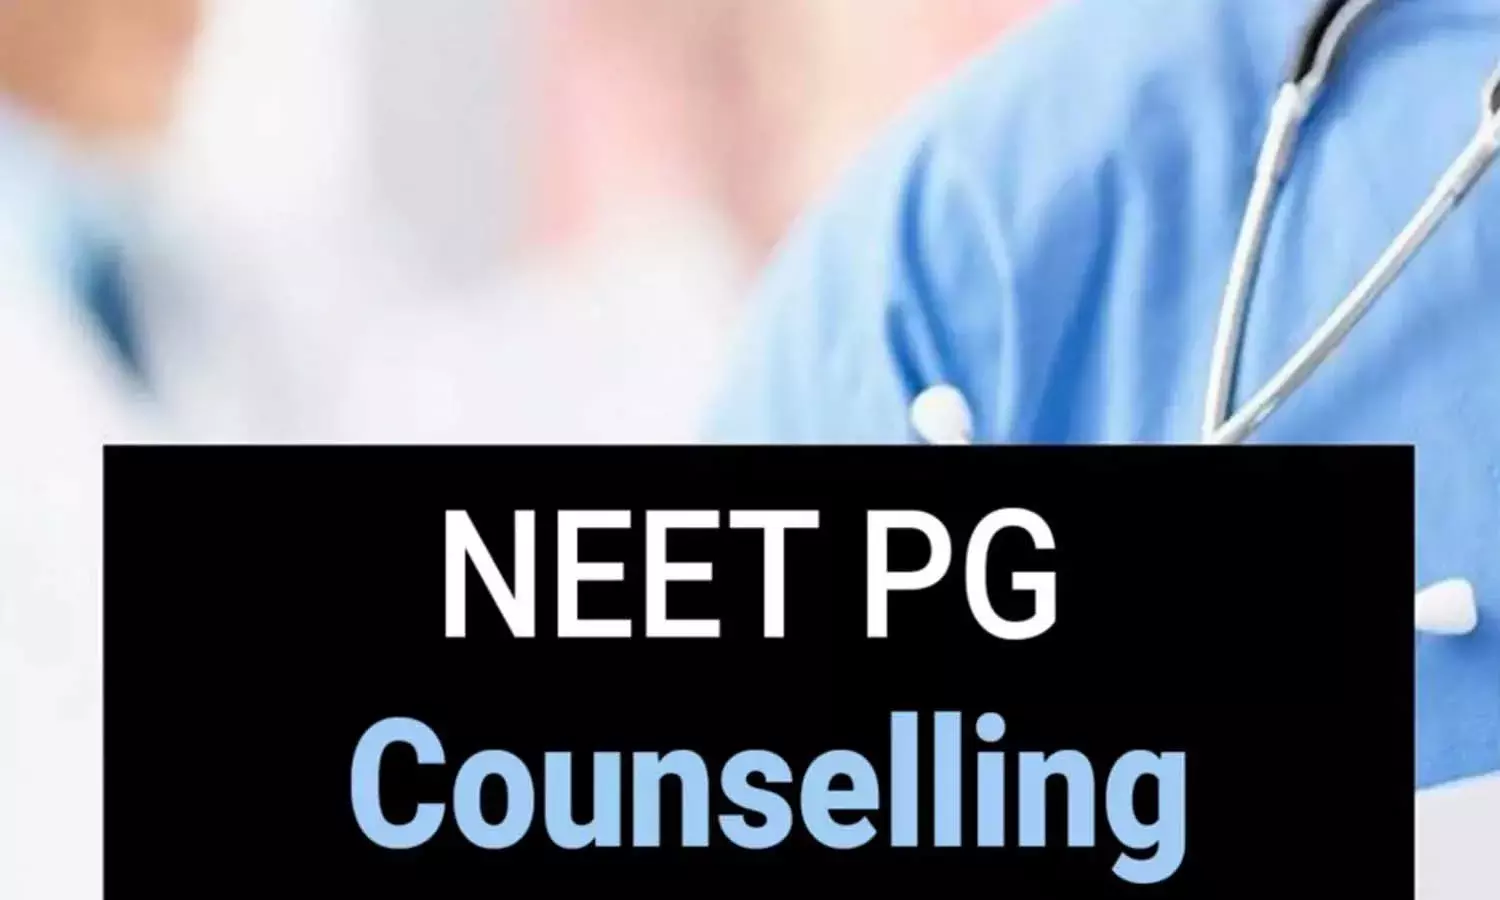 NEET PG Counselling: नीट पीजी काउंसलिंग की तारीख आई सामने, स्वास्थ्य मंत्री ने दी जानकारी